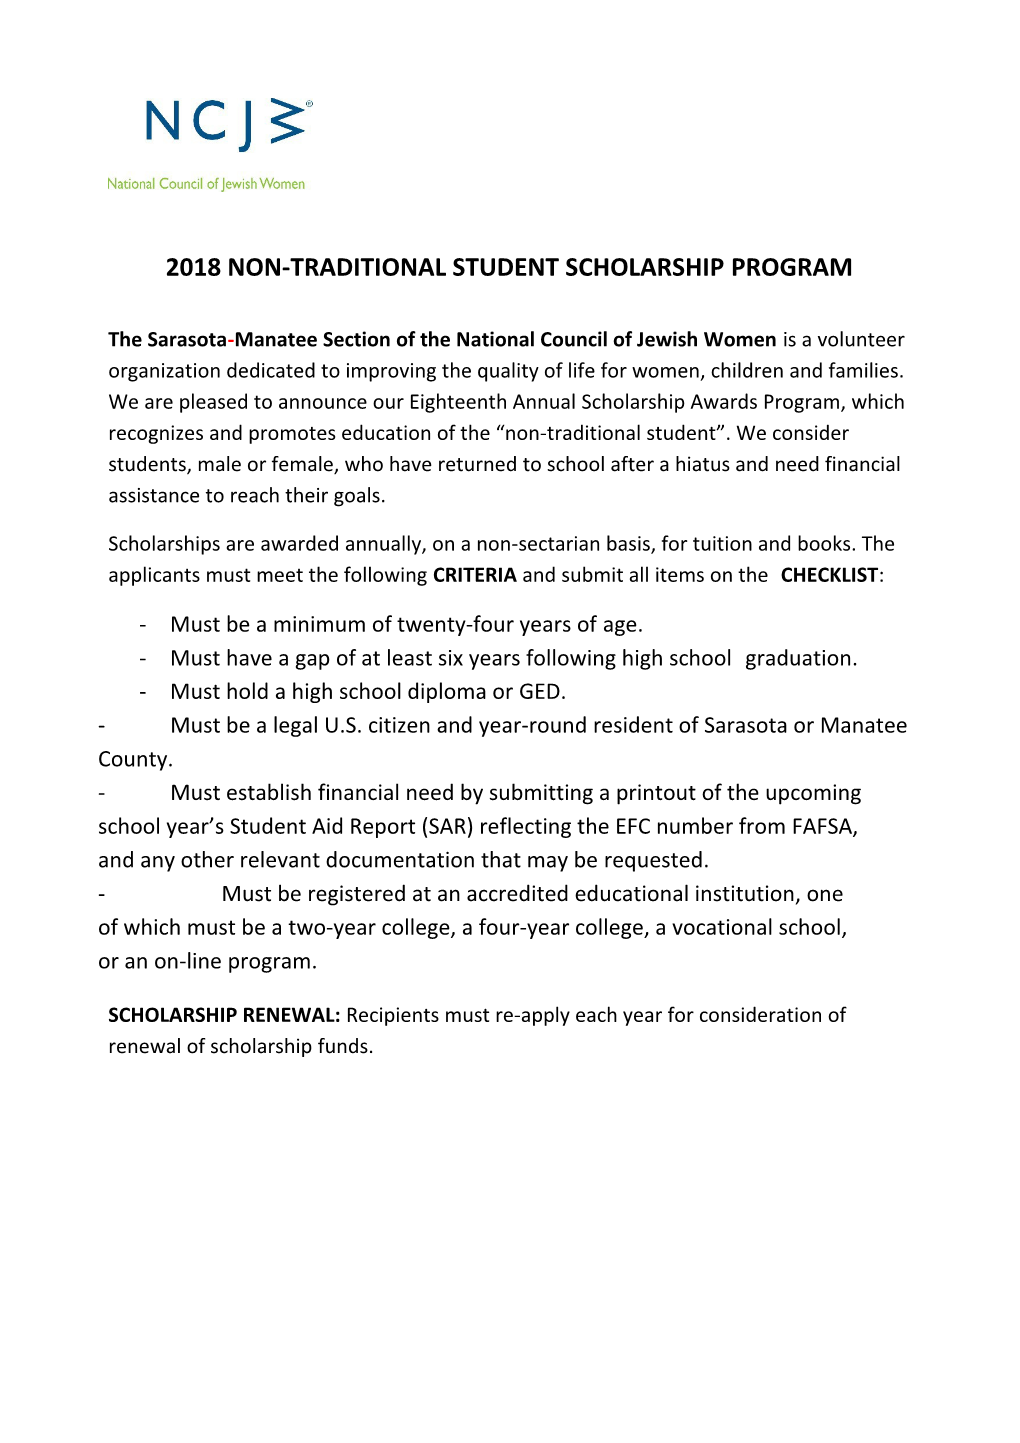 2018 Non-Traditional Student Scholarship Program